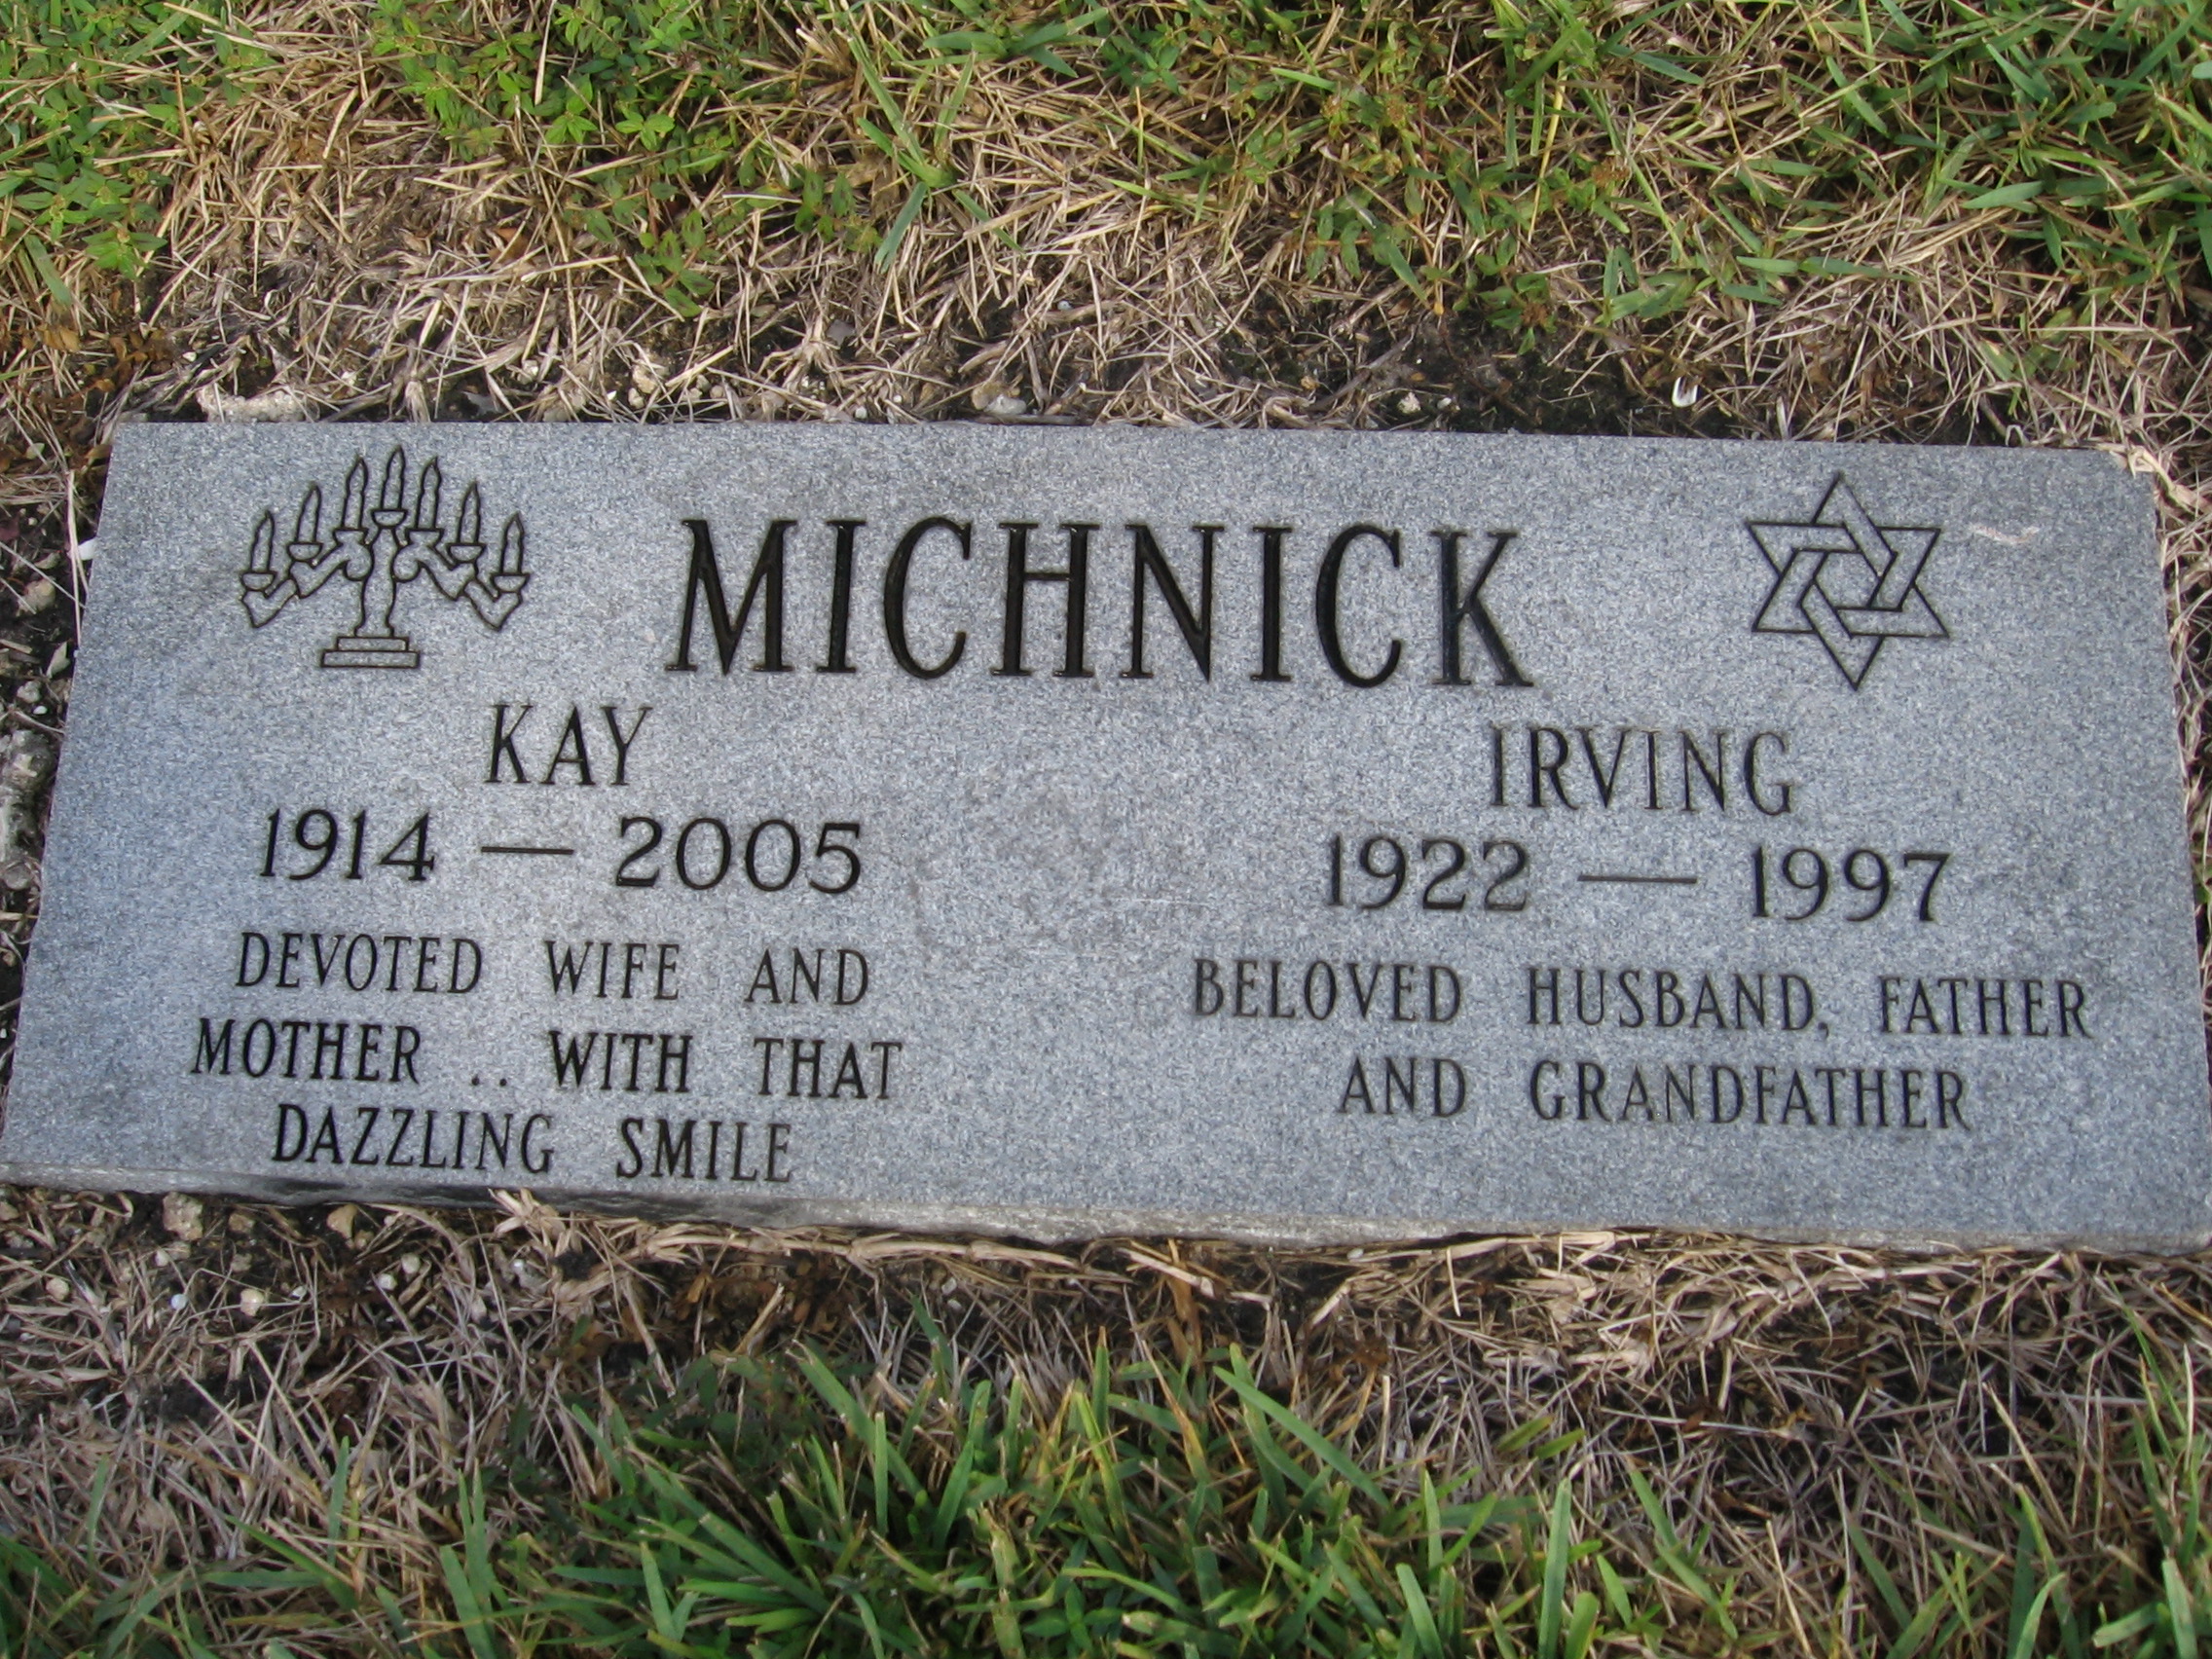 Kay Michnick